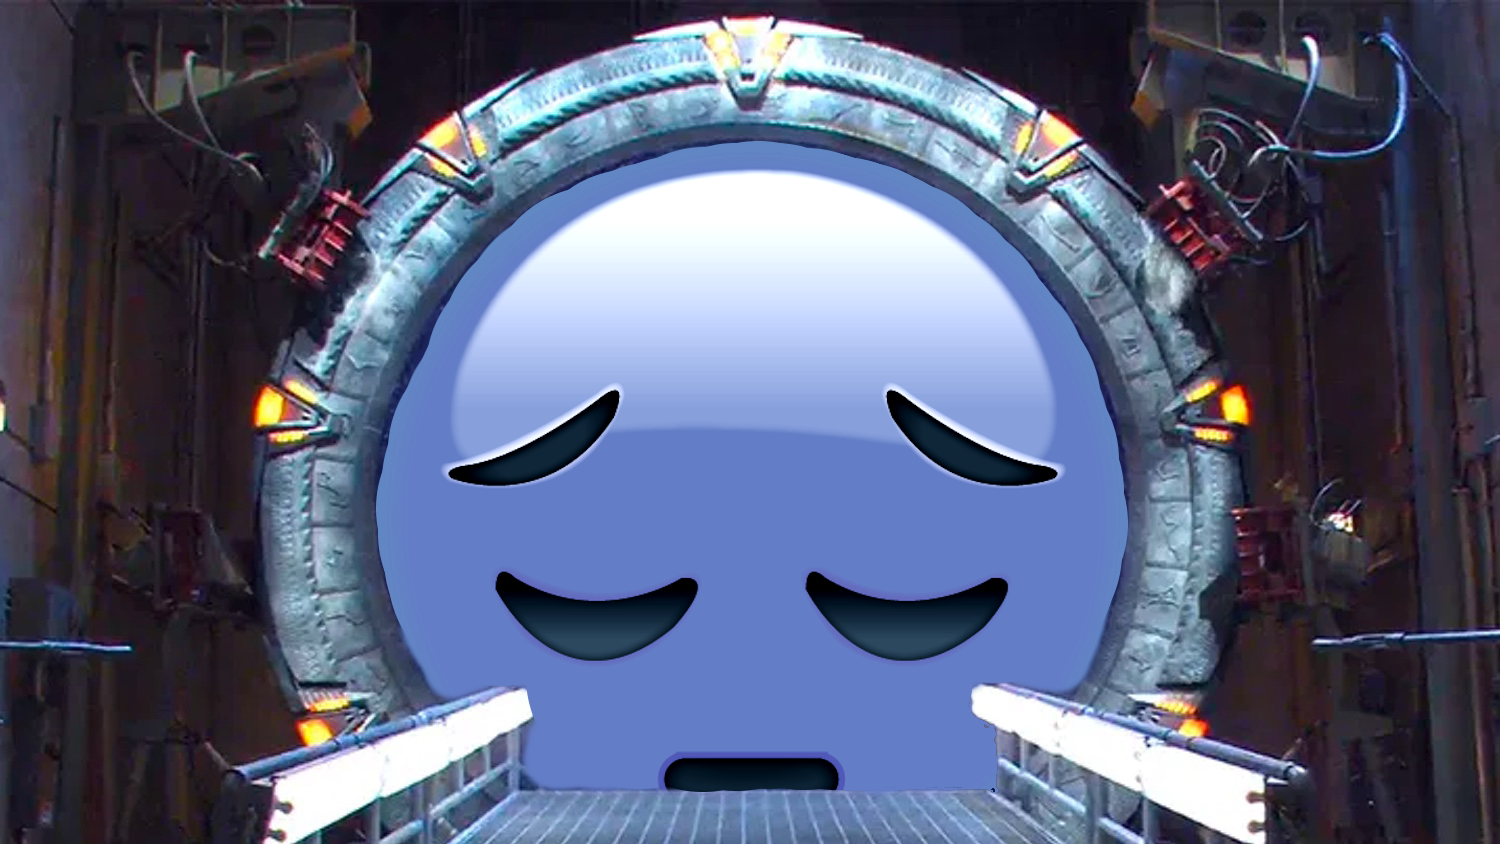 Sad emoji in the middle of a Stargate